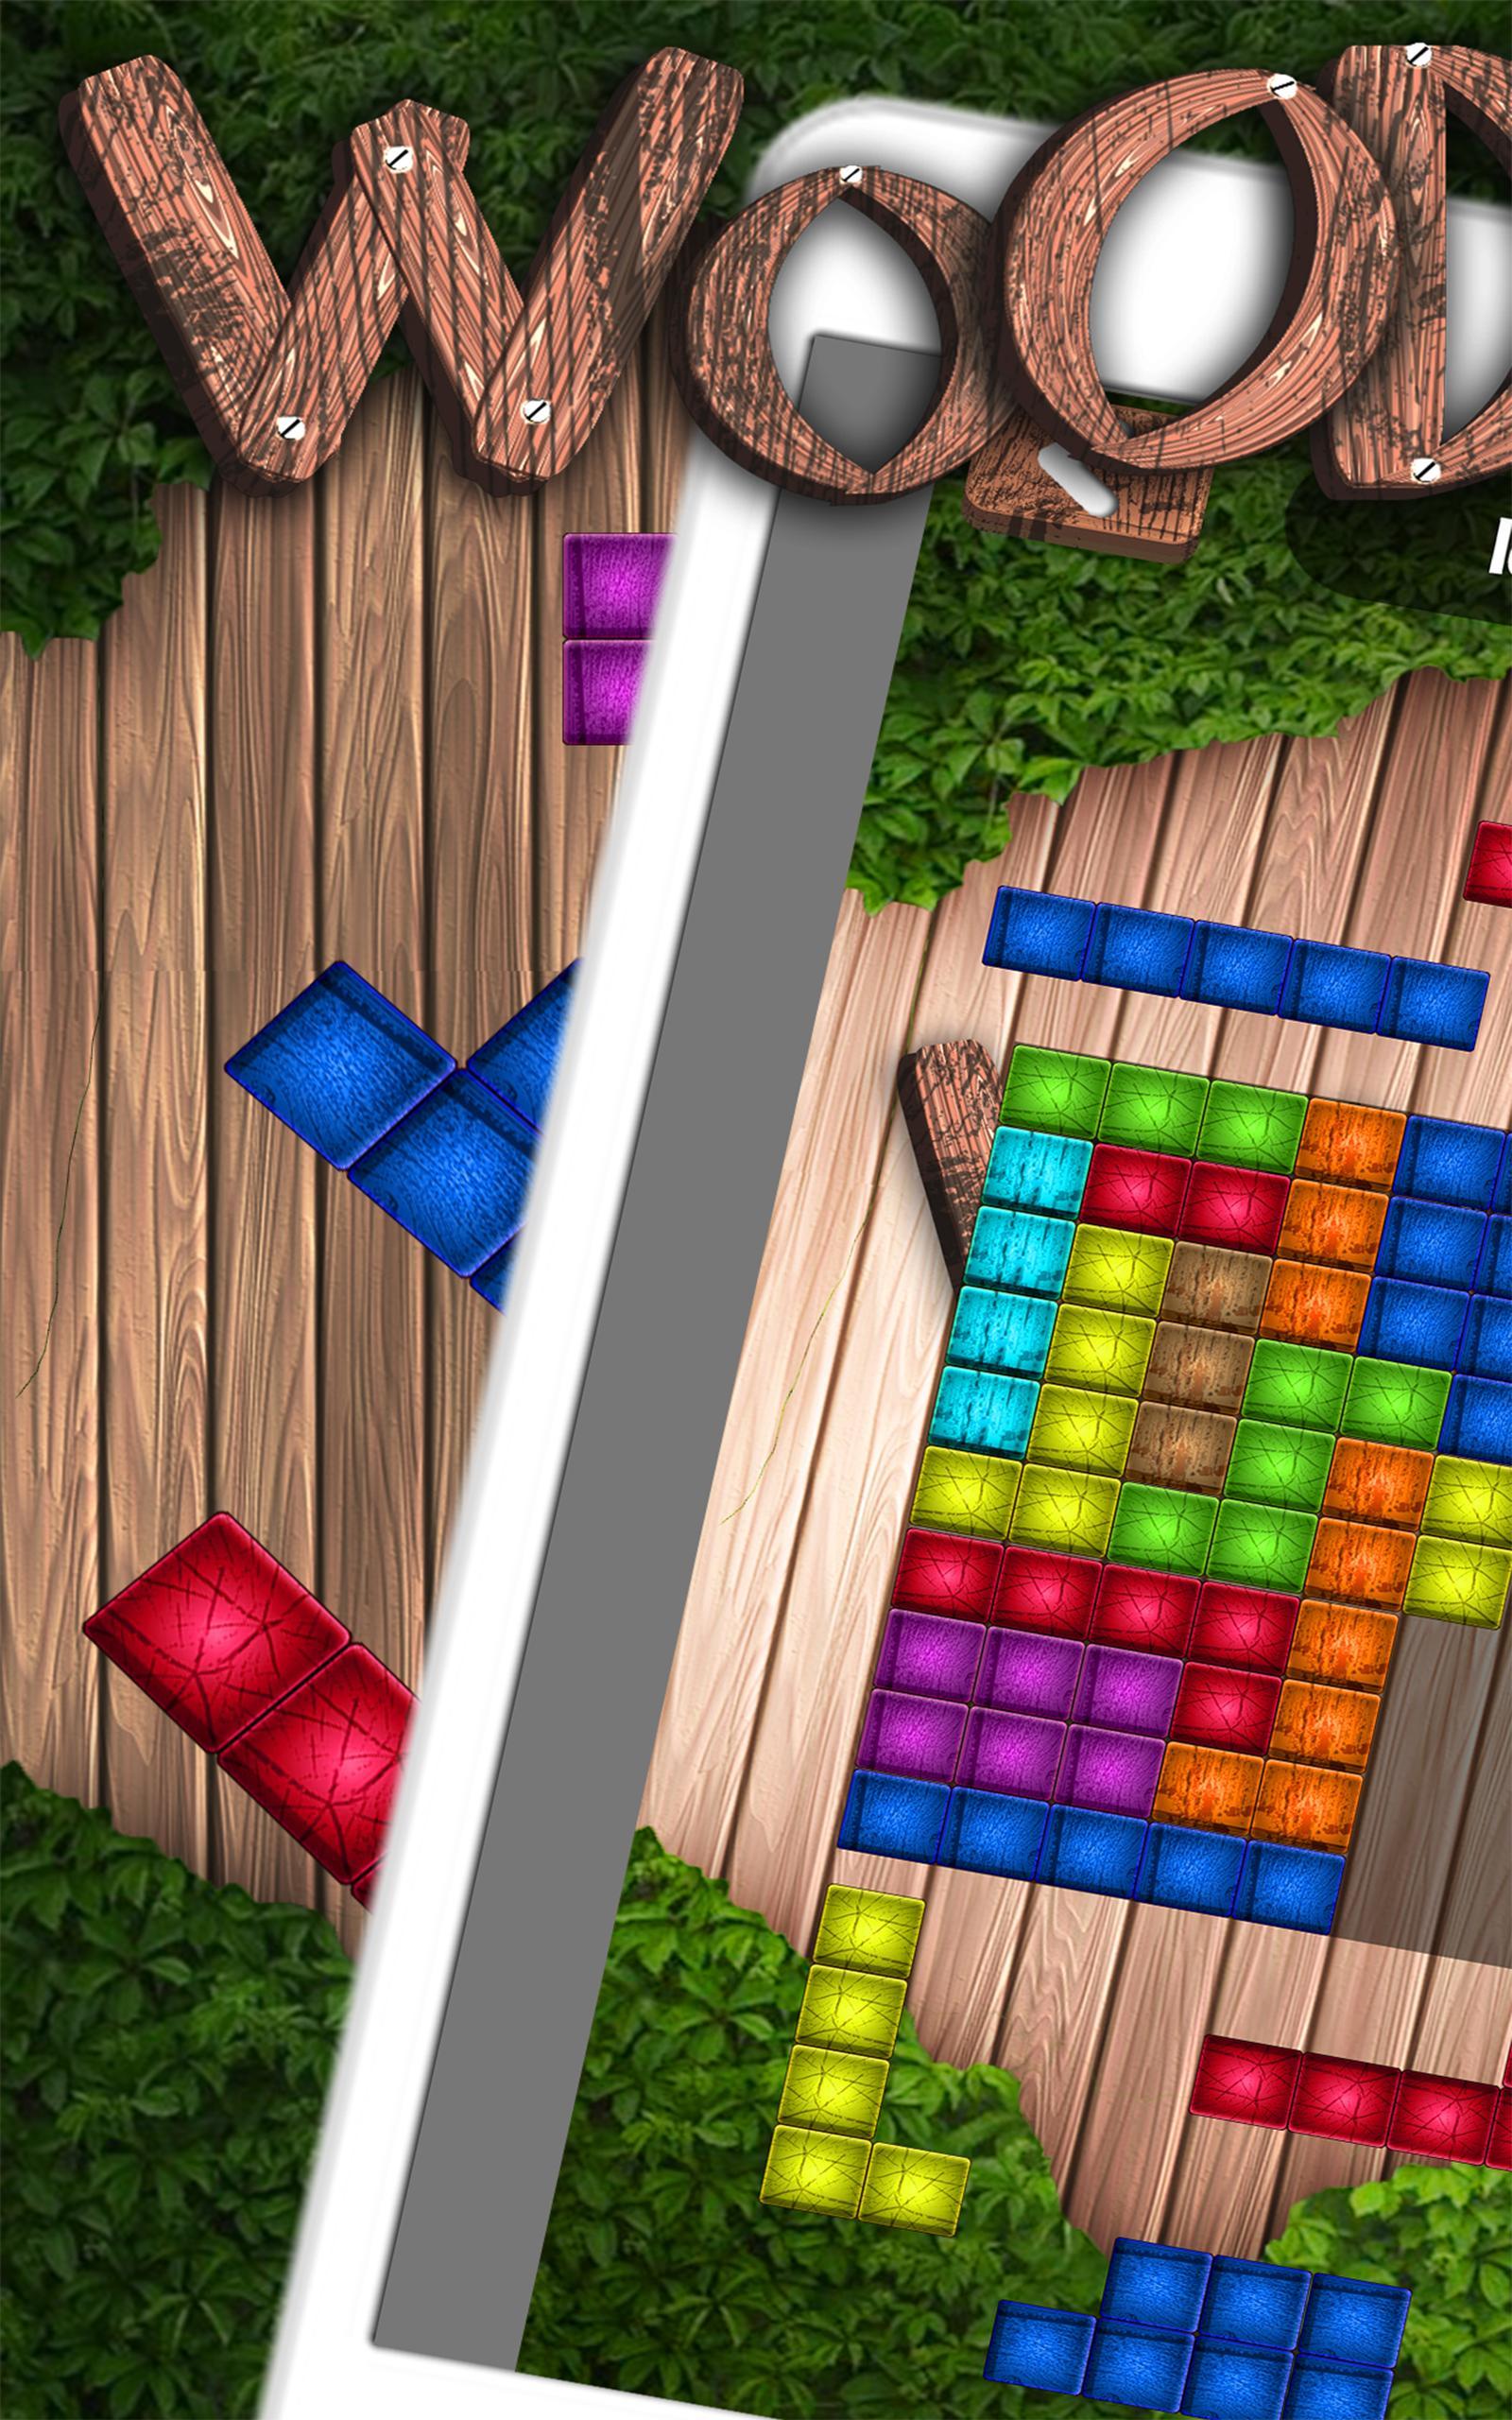 Wood Block уровень 137. Matches Puzzle game. Match Puzzle with Sticks 263 уровень. Wood Block hard 129 уровень картинка.